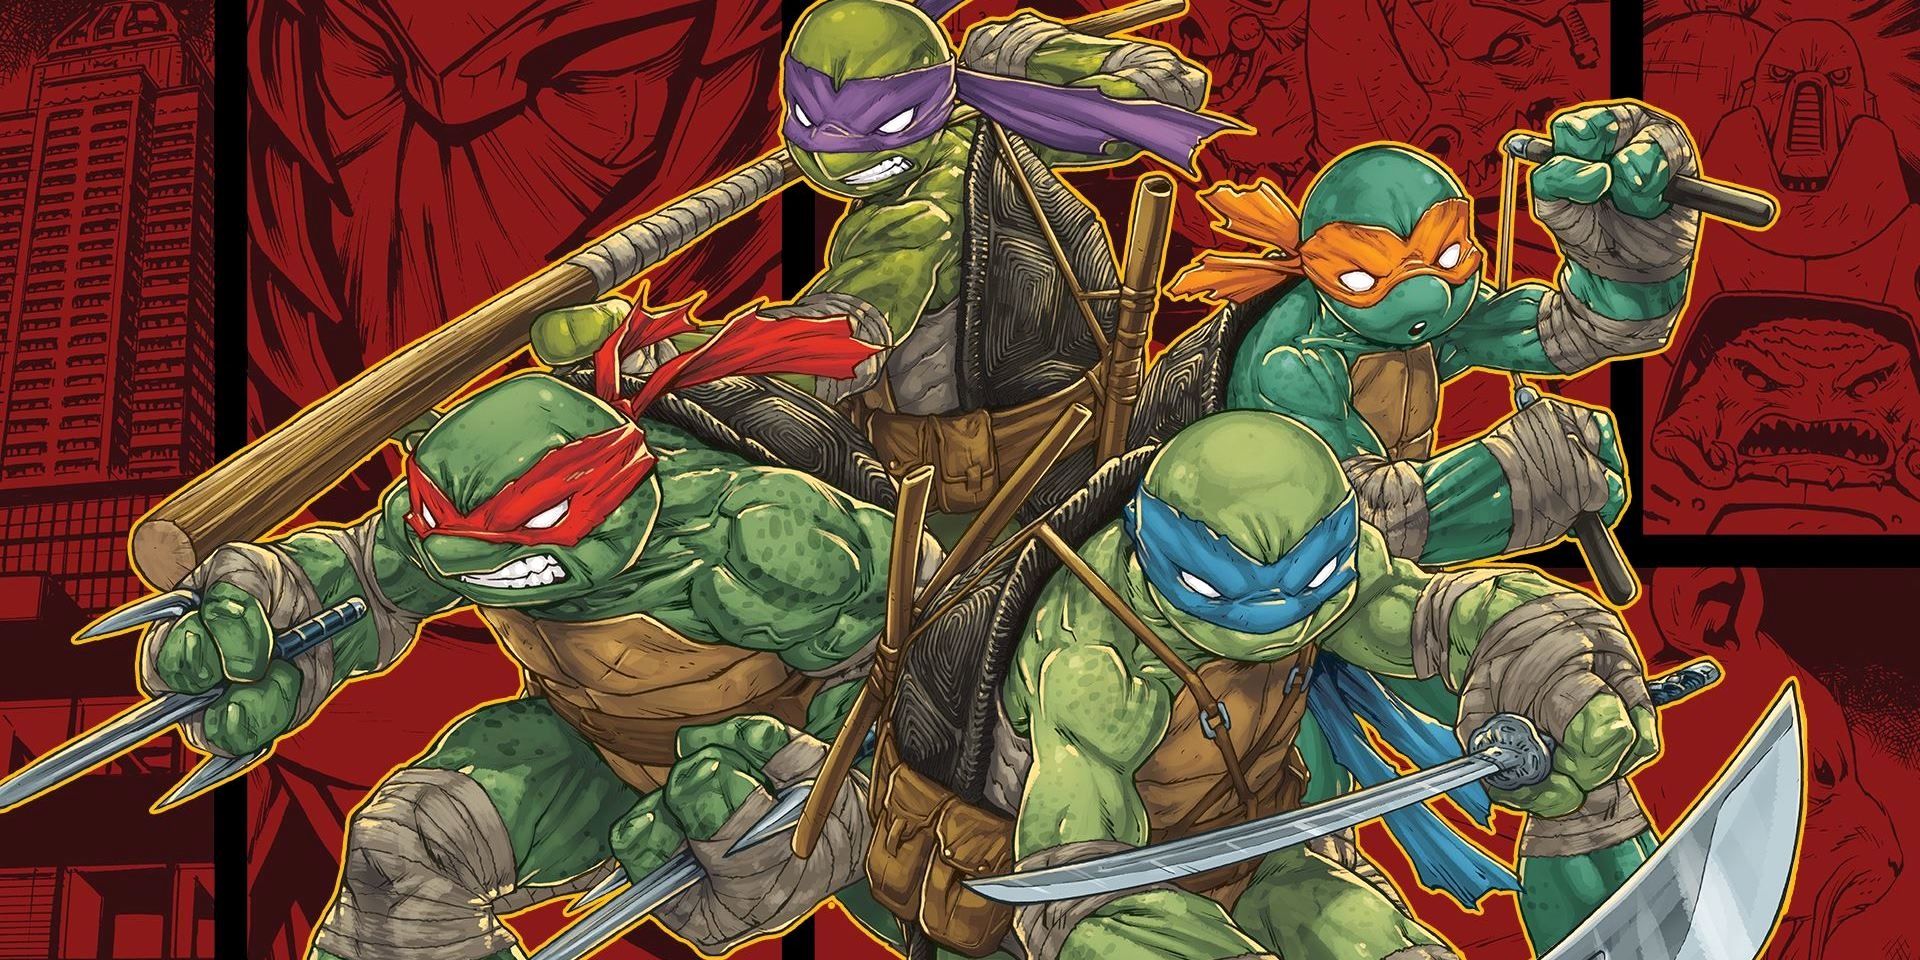 Tmnt Wallpaper Inspirational Wallpaper Teenage Mutant Ninja Turtles Tmnt This Week of The Hudson